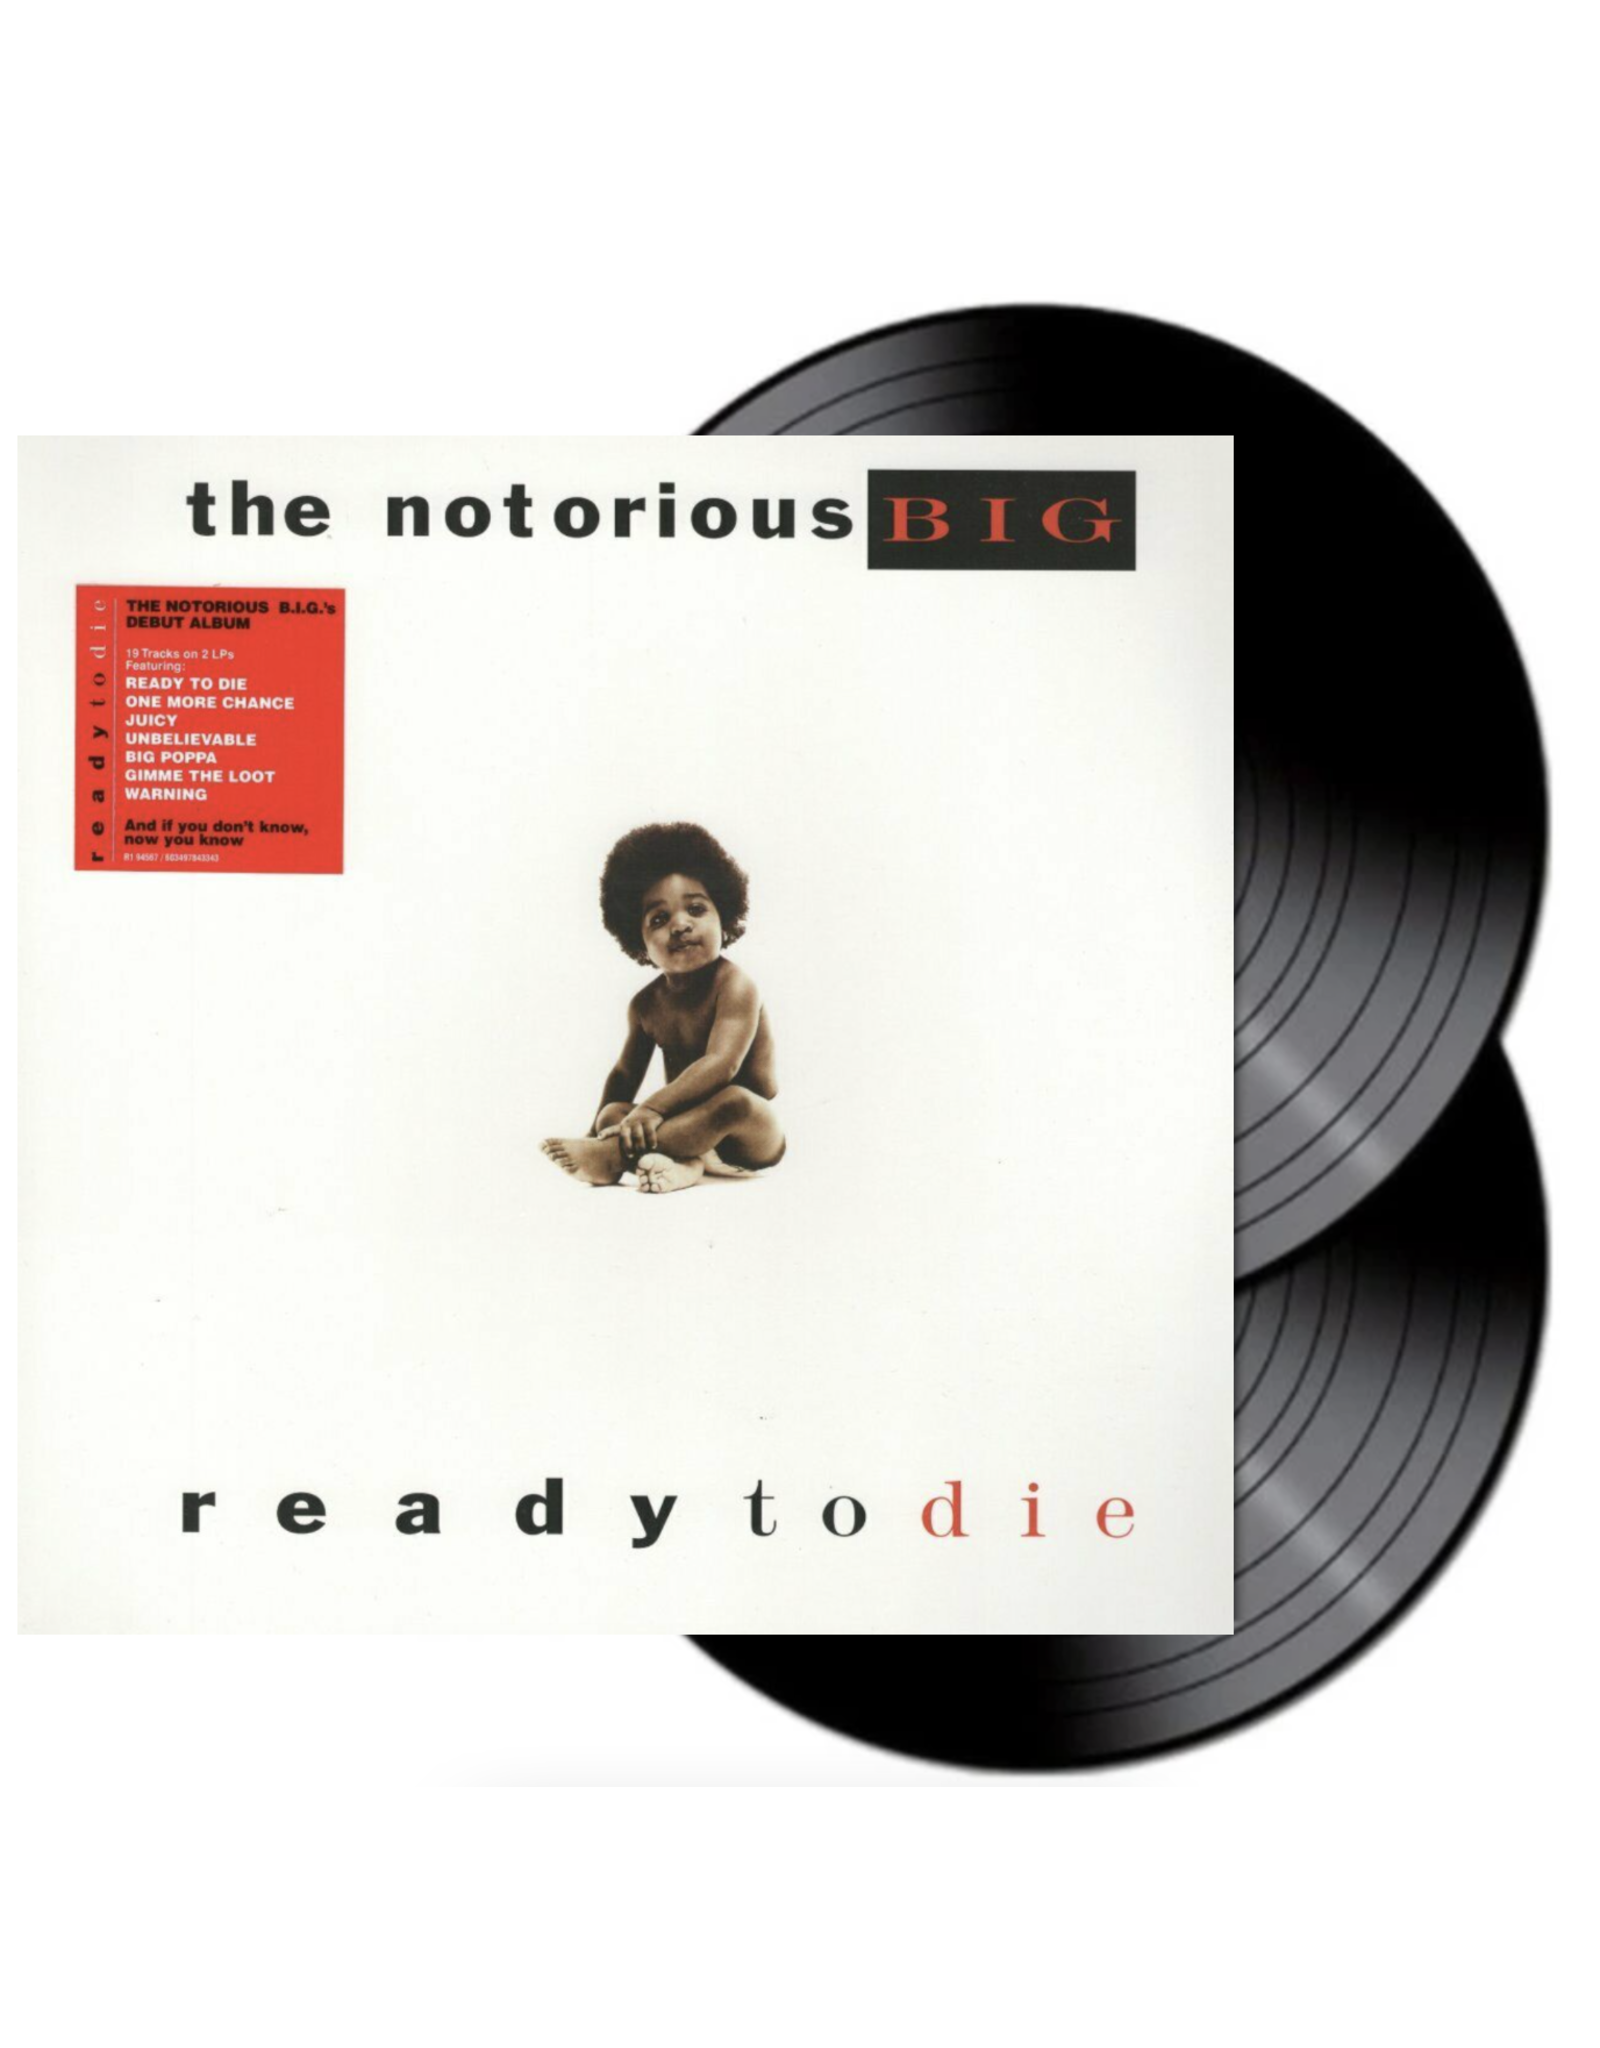 the notorious big ready to die vinyl